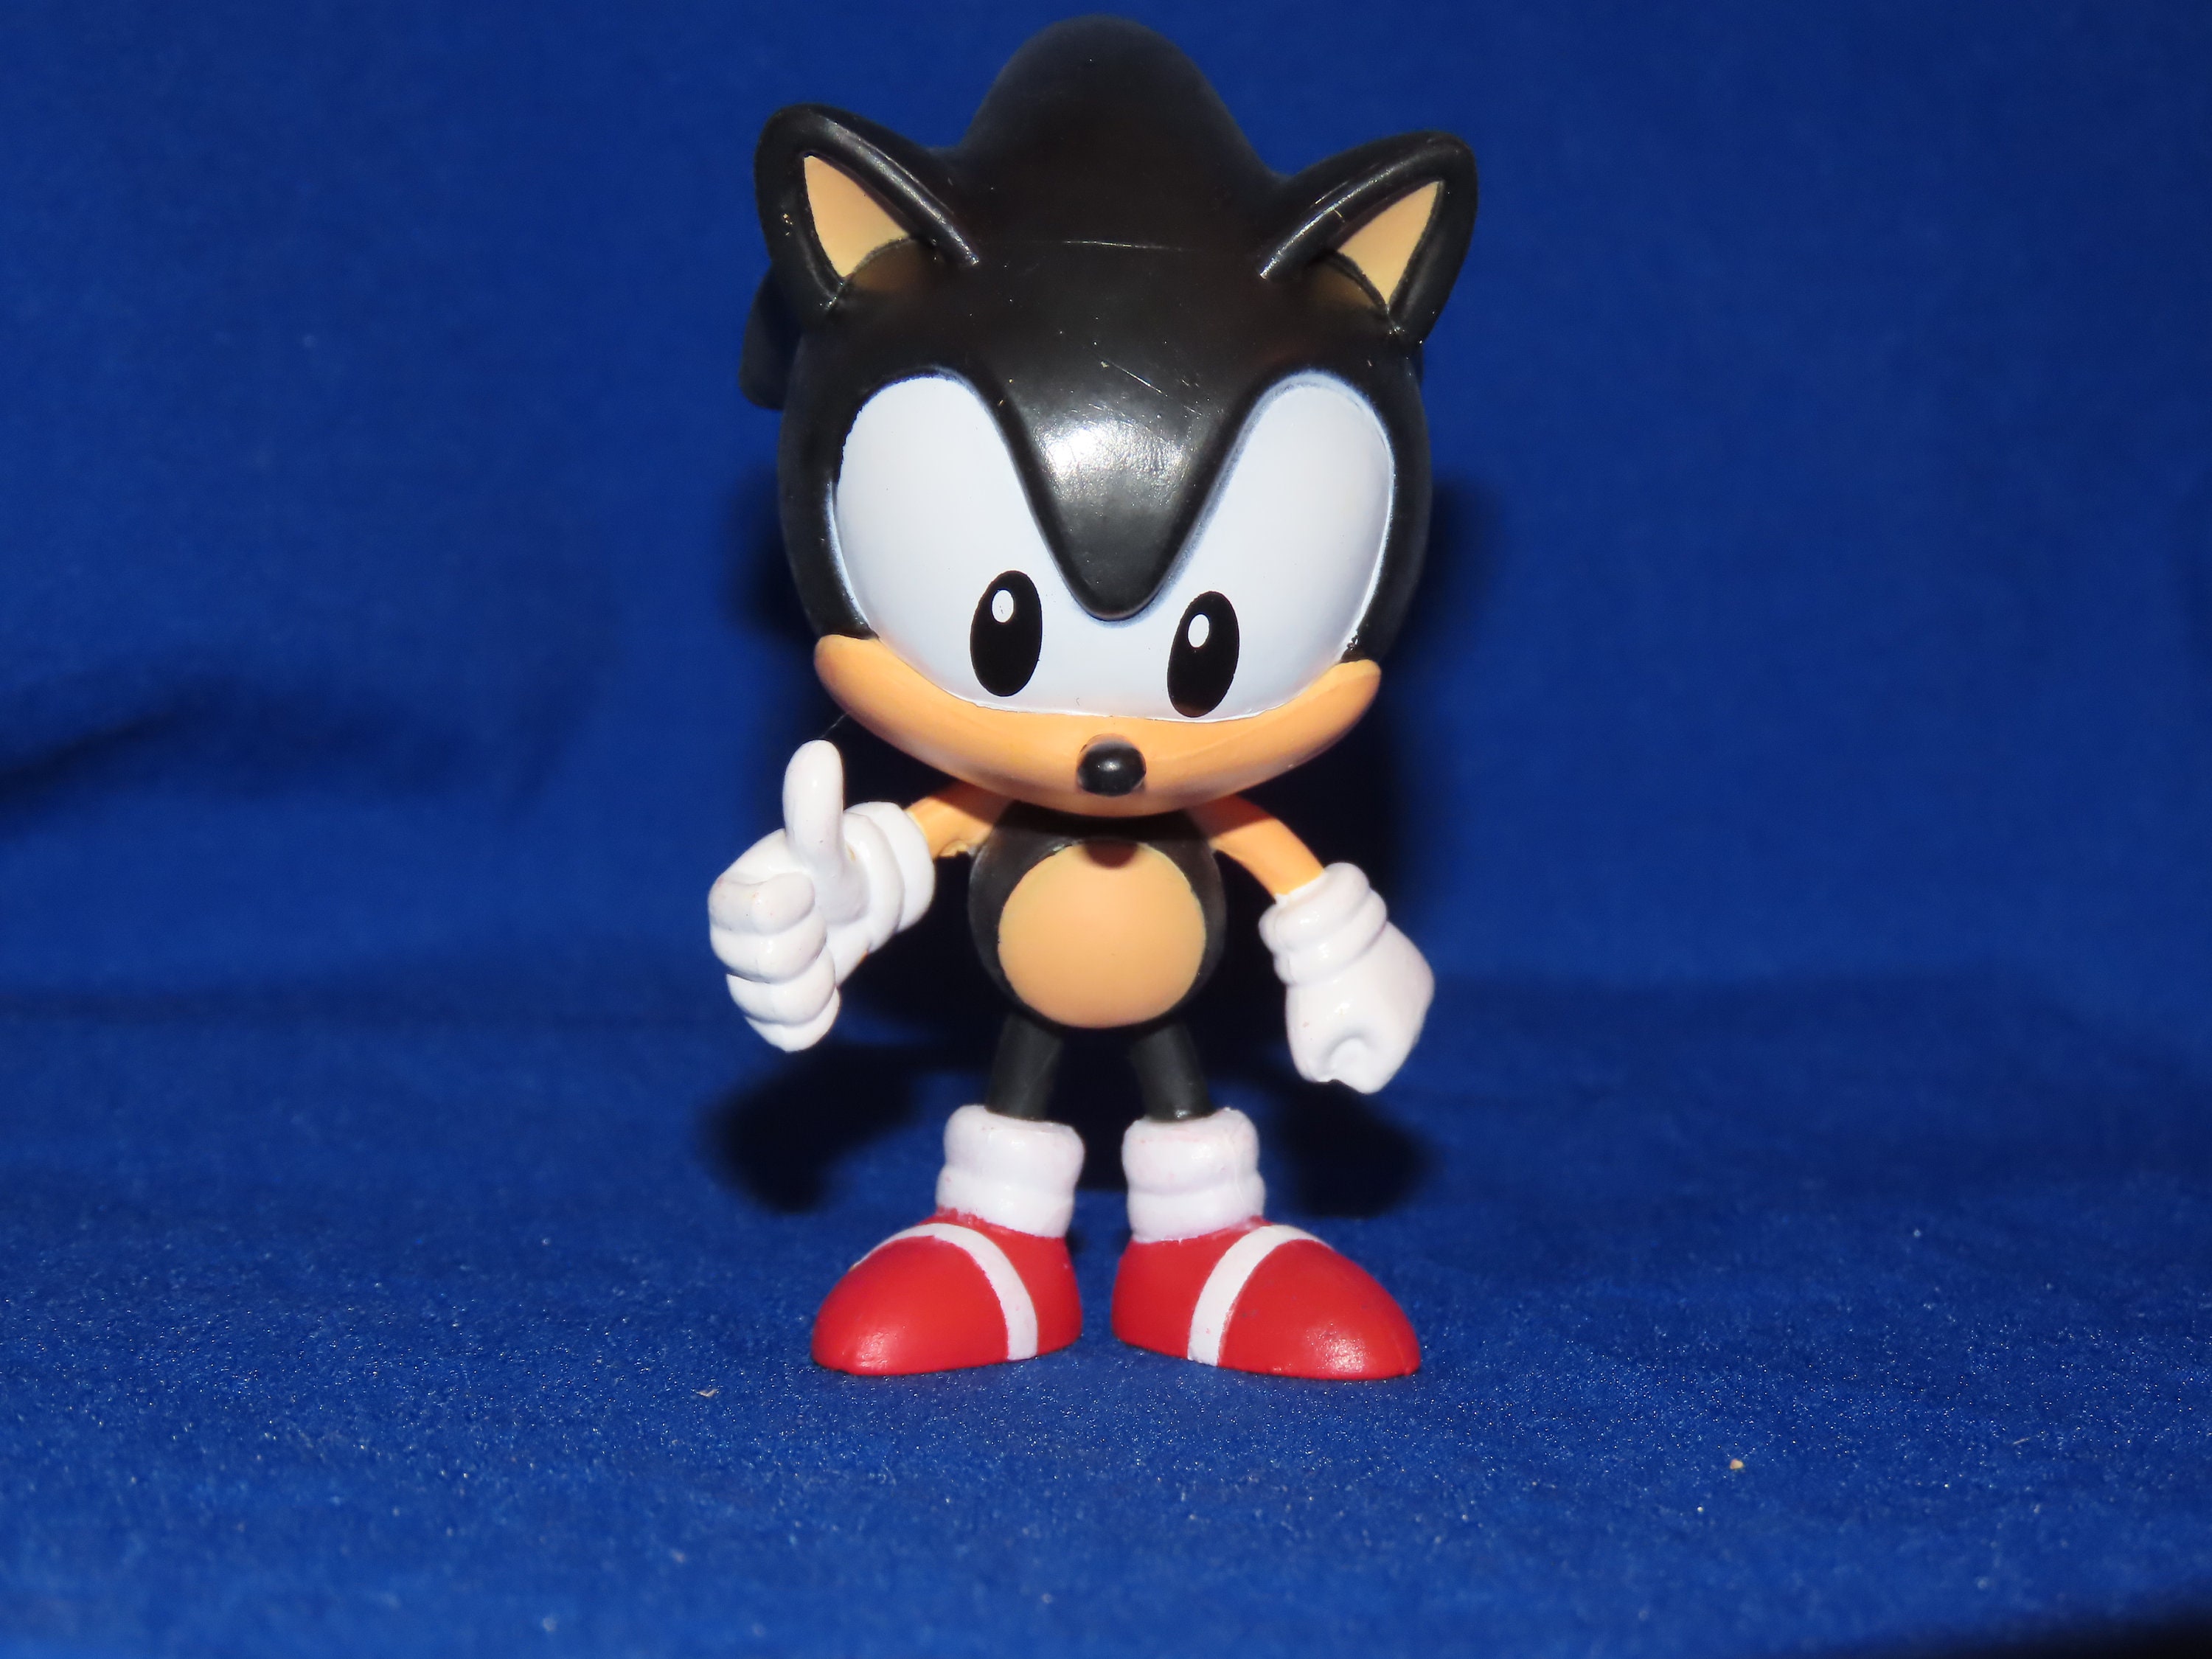 Jazwares Sonic the Hedgehog Metal Sonic Action Figure 3 Inch Sega Rare Toy